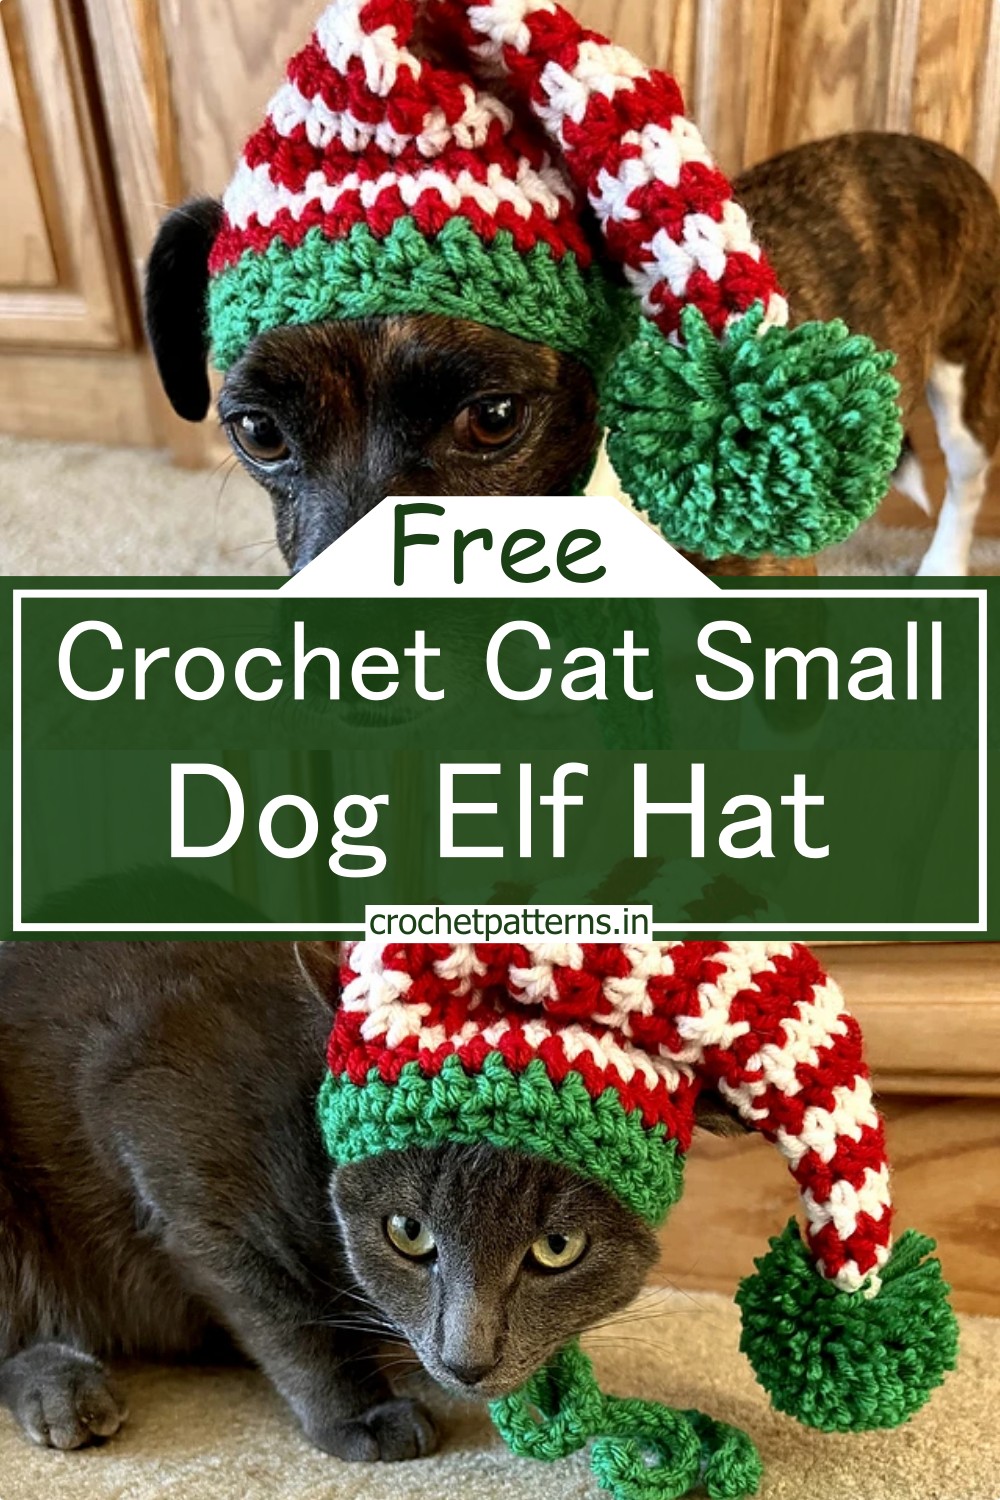 Cat Small Dog Elf Hat